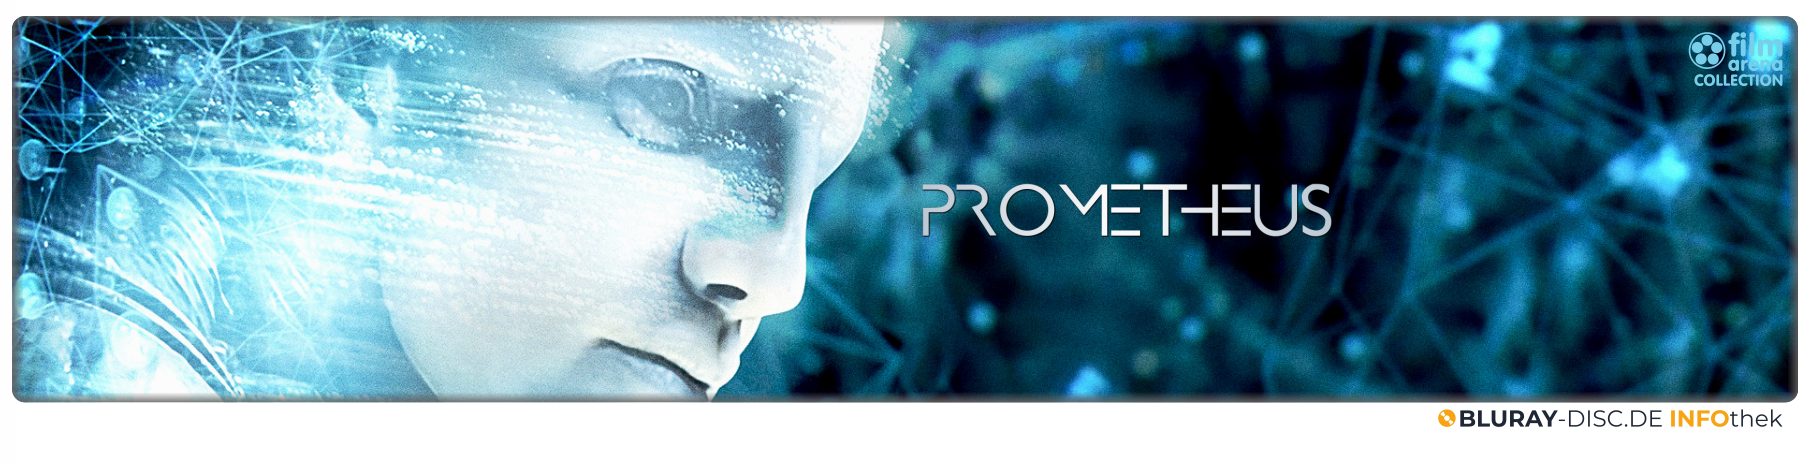 Prometheus.png